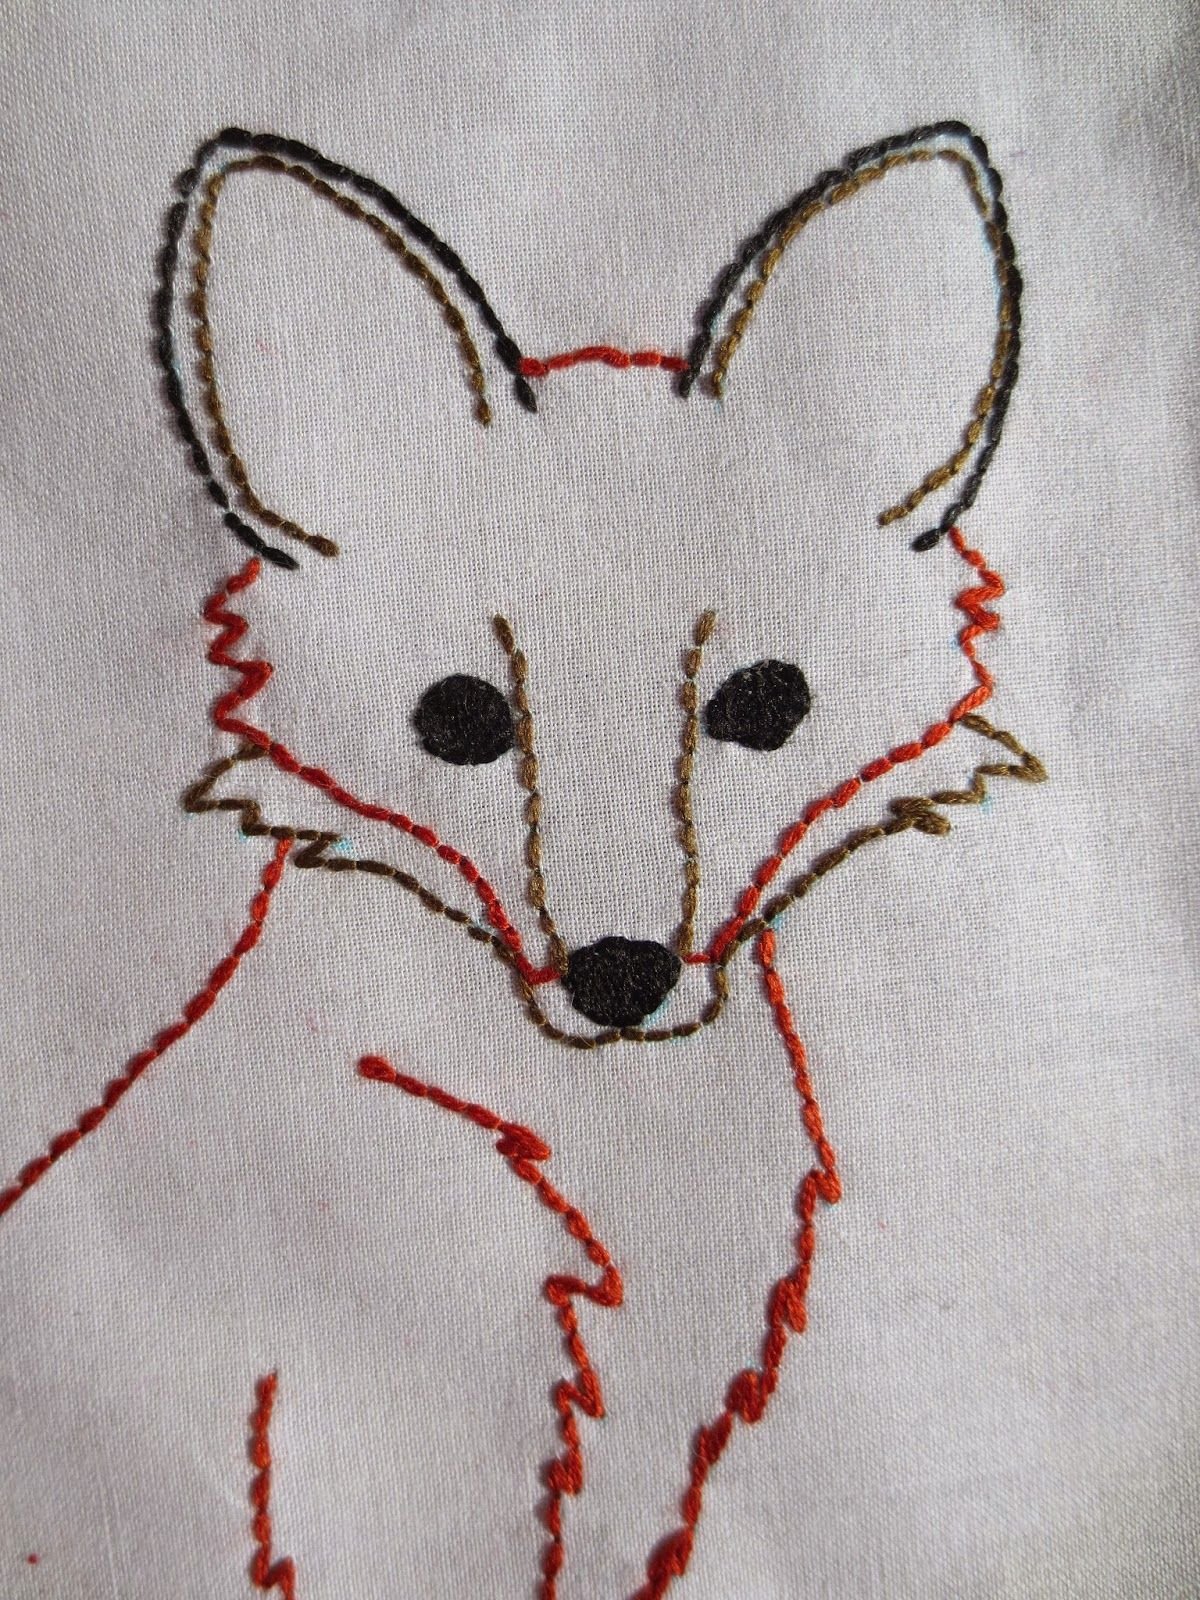 Вышивка лисы тамбурным швом